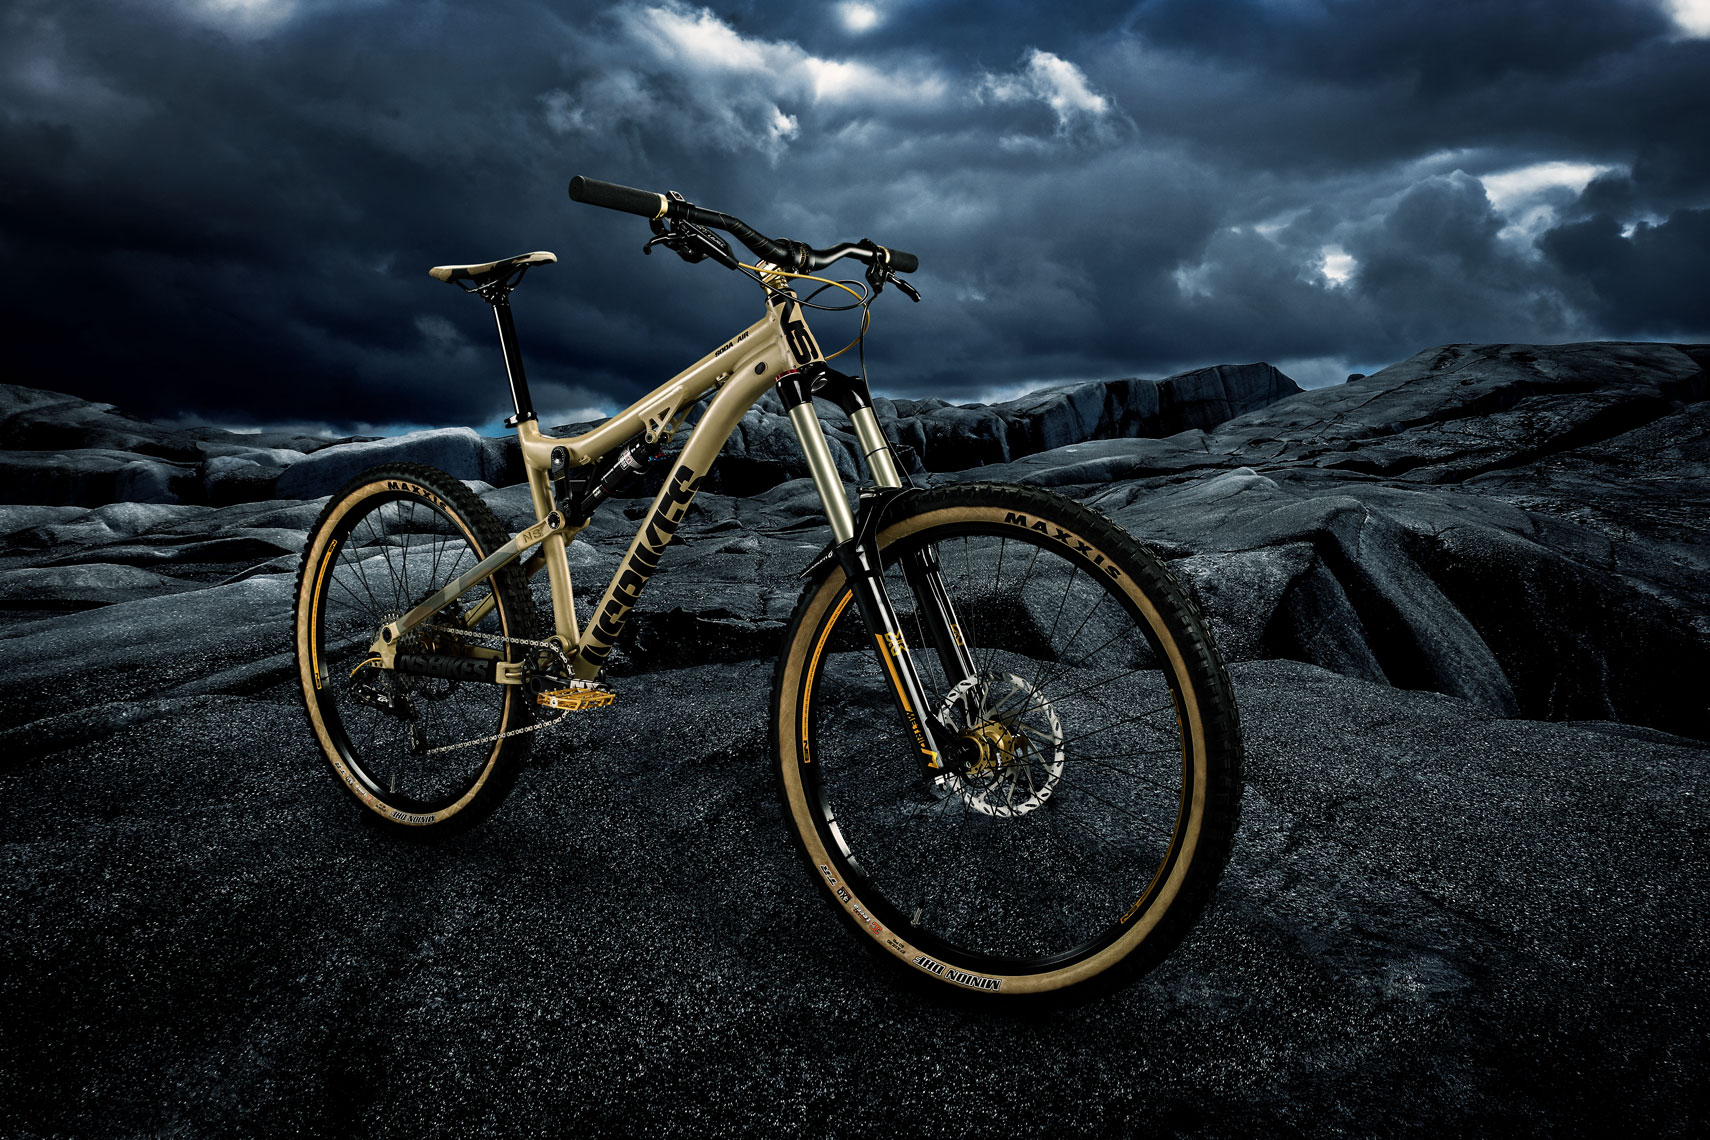 NSBIKES/tan bike/lunar black landscape/product photography